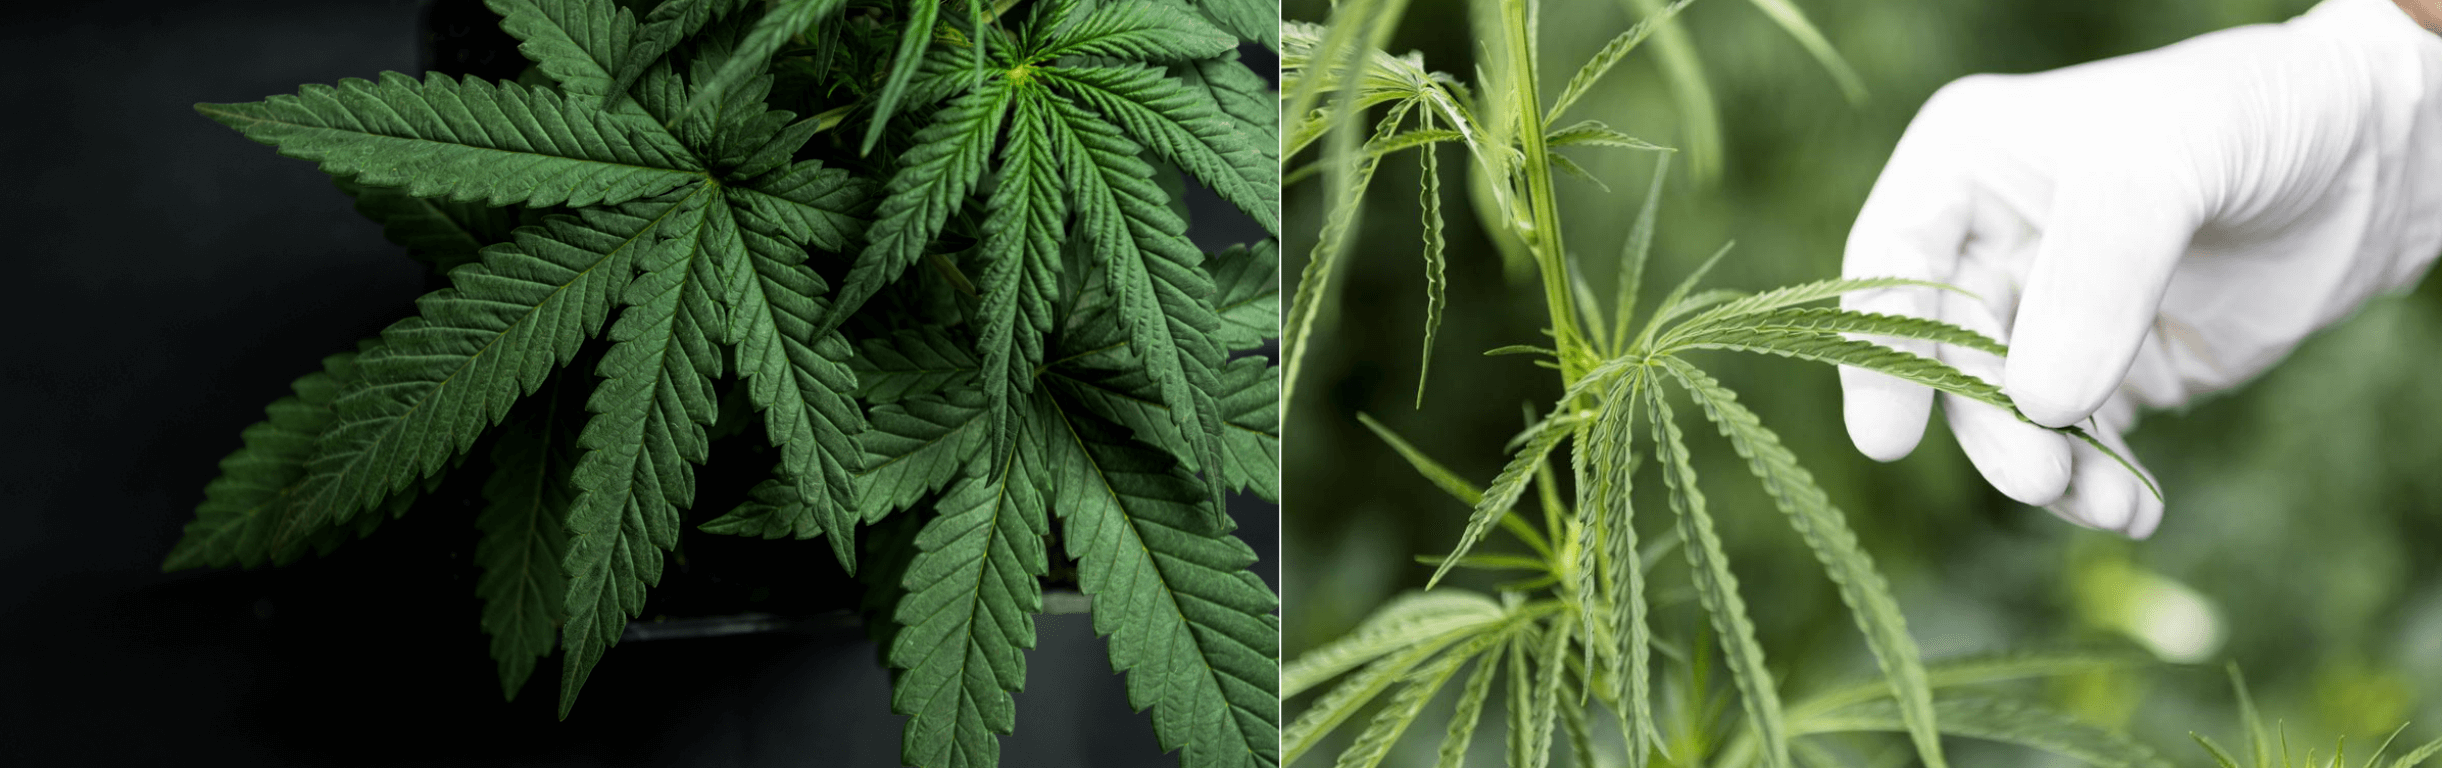 Cannabis Indica (izda) y cannabis Sativa (dcha)